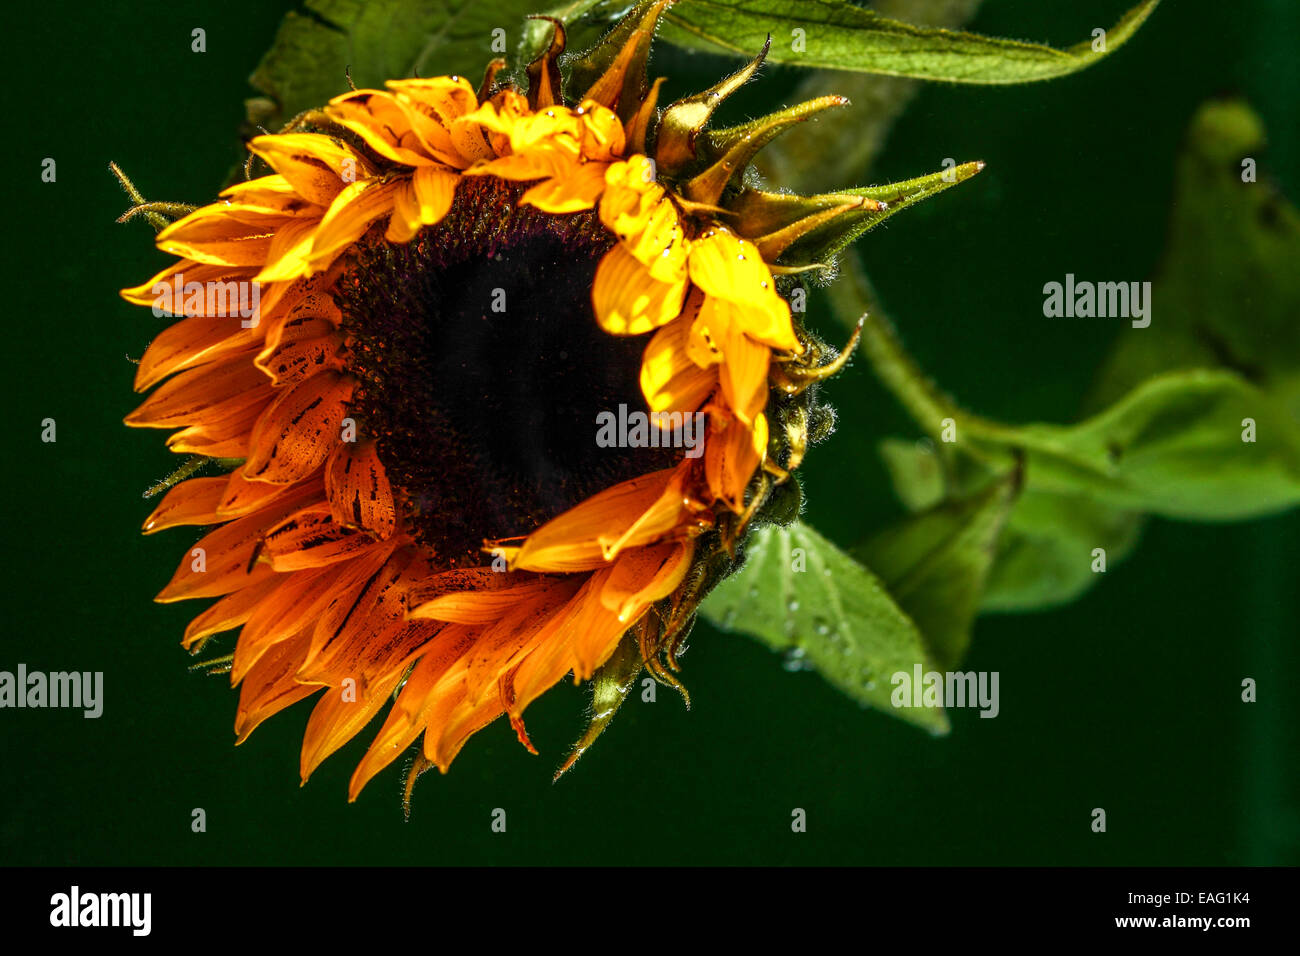 Sunflower submerged under water Stock Photo